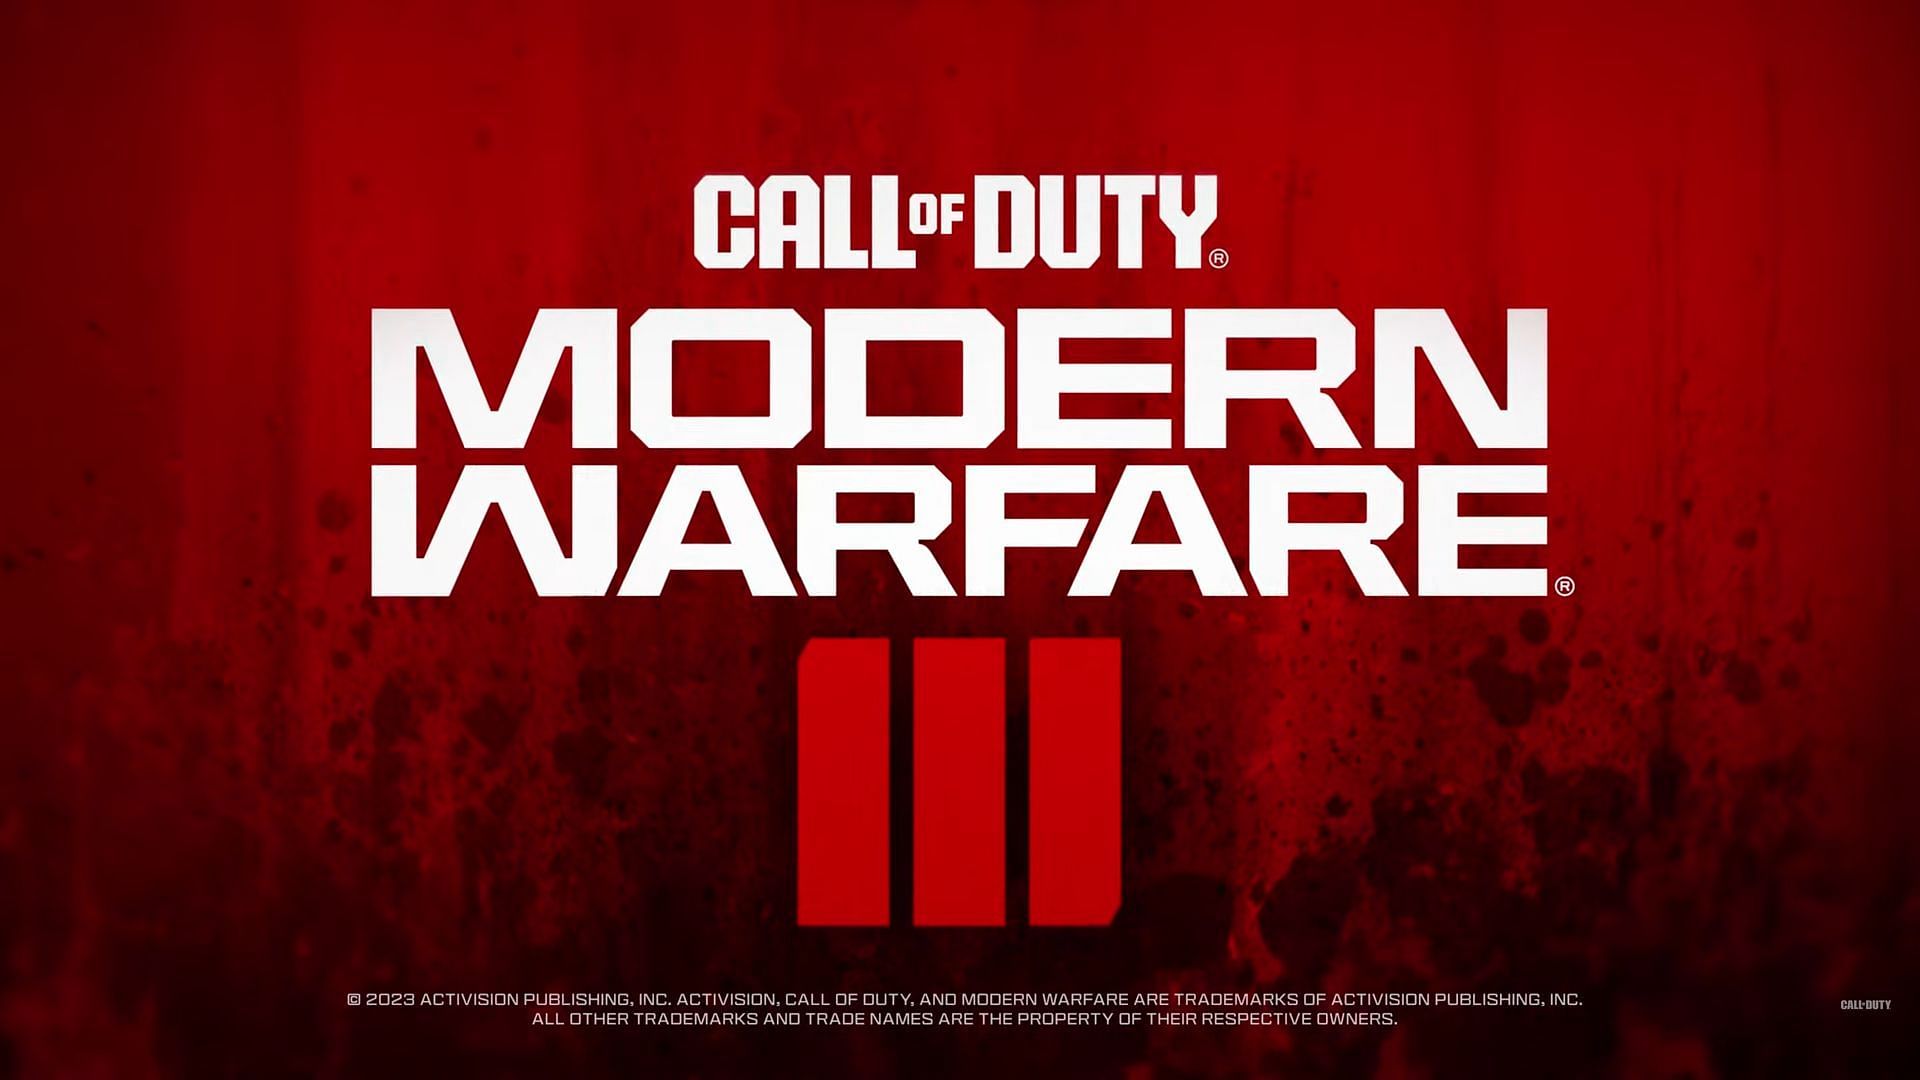 QcK Large Call of Duty®: Modern Warfare® III Edition